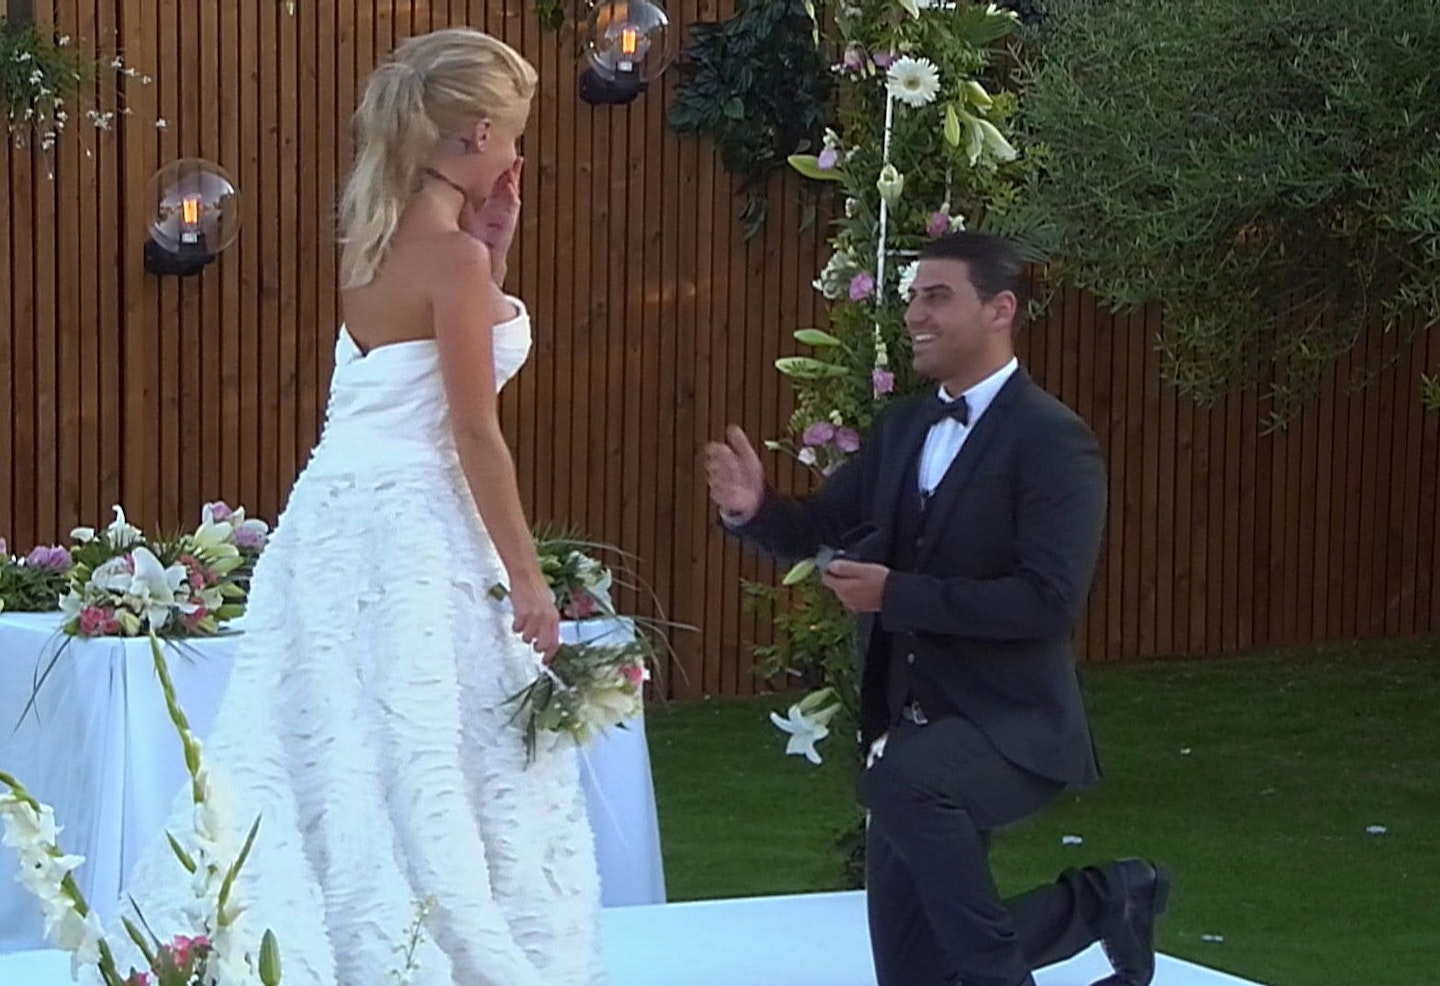 Jon Clark proposing to Hannah Elizabeth in the Love Island villa